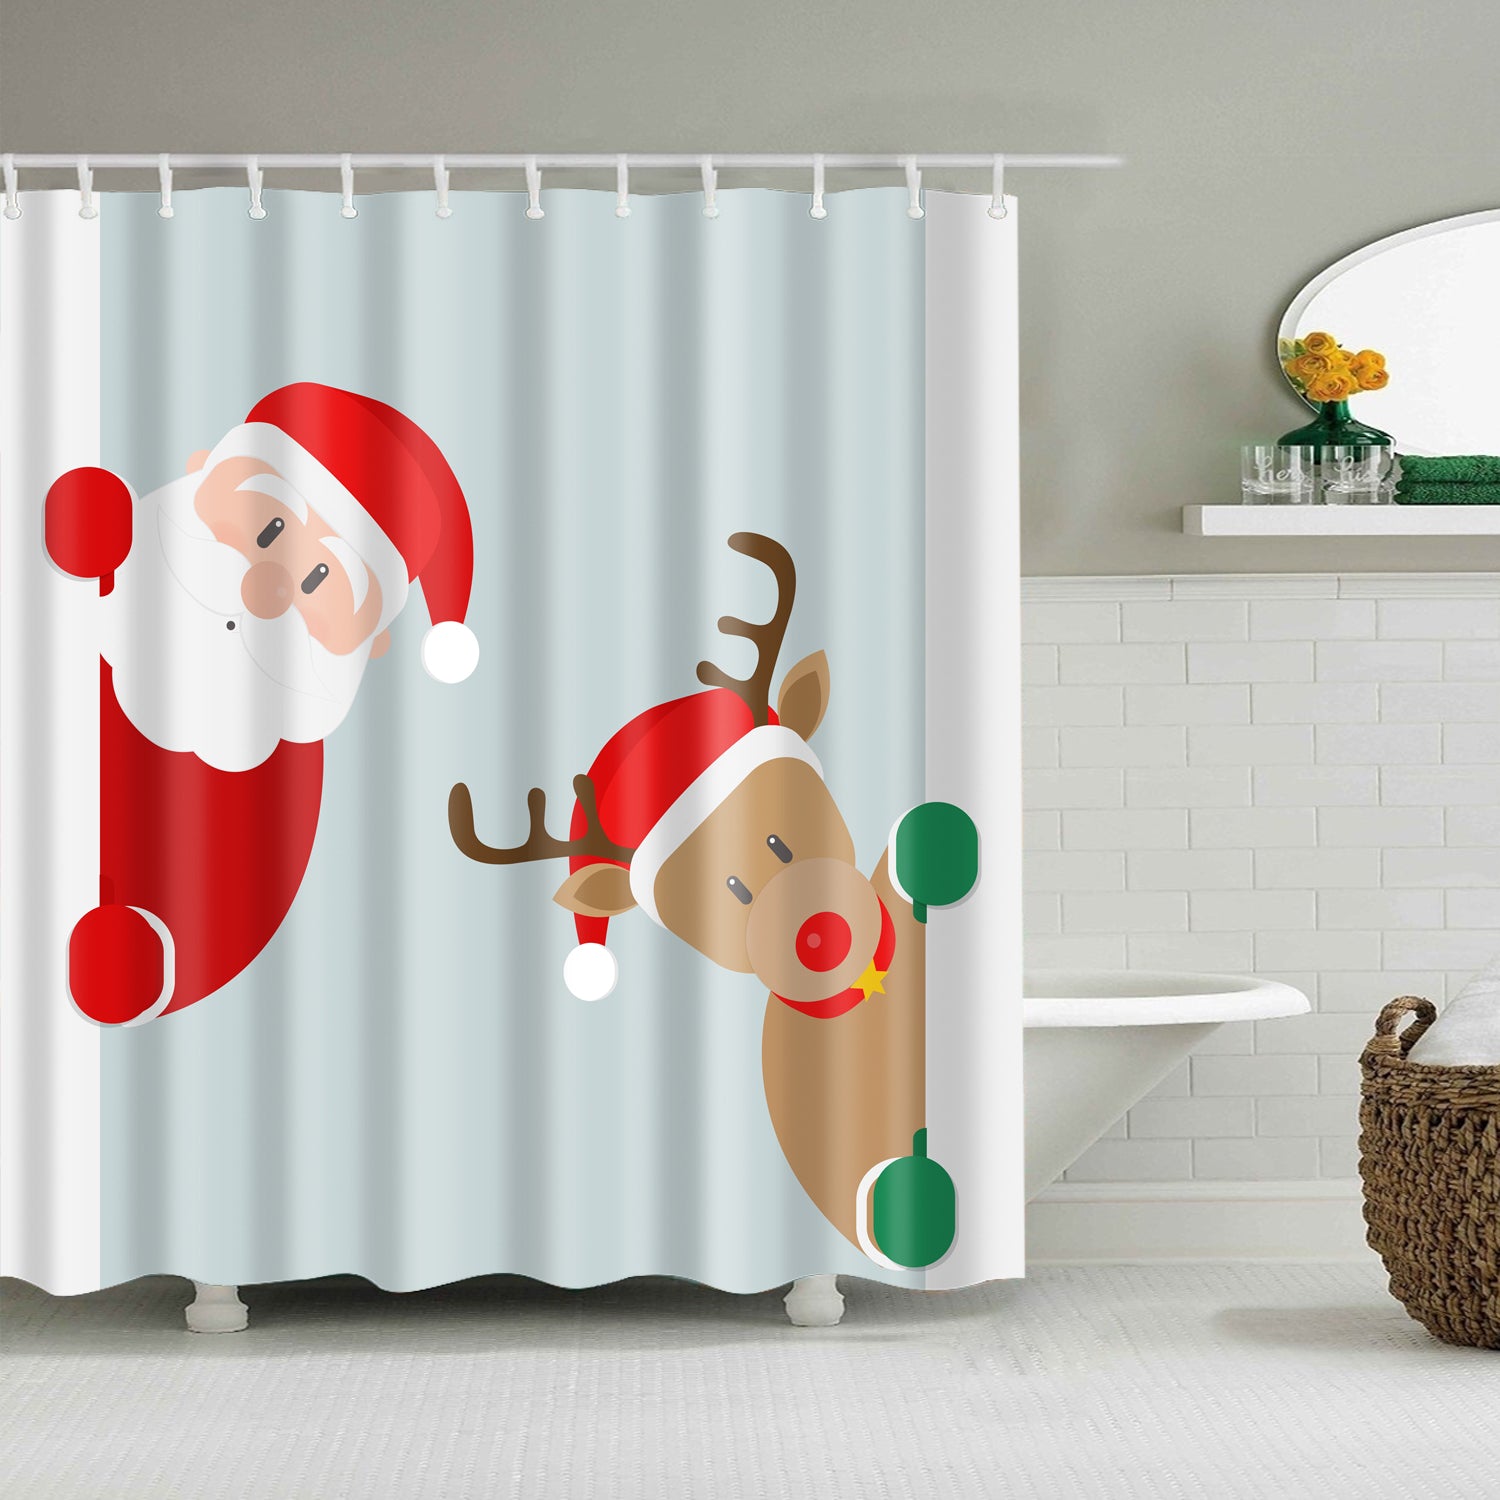 Teal Backdrop Santa with Reindeer Shower Curtain